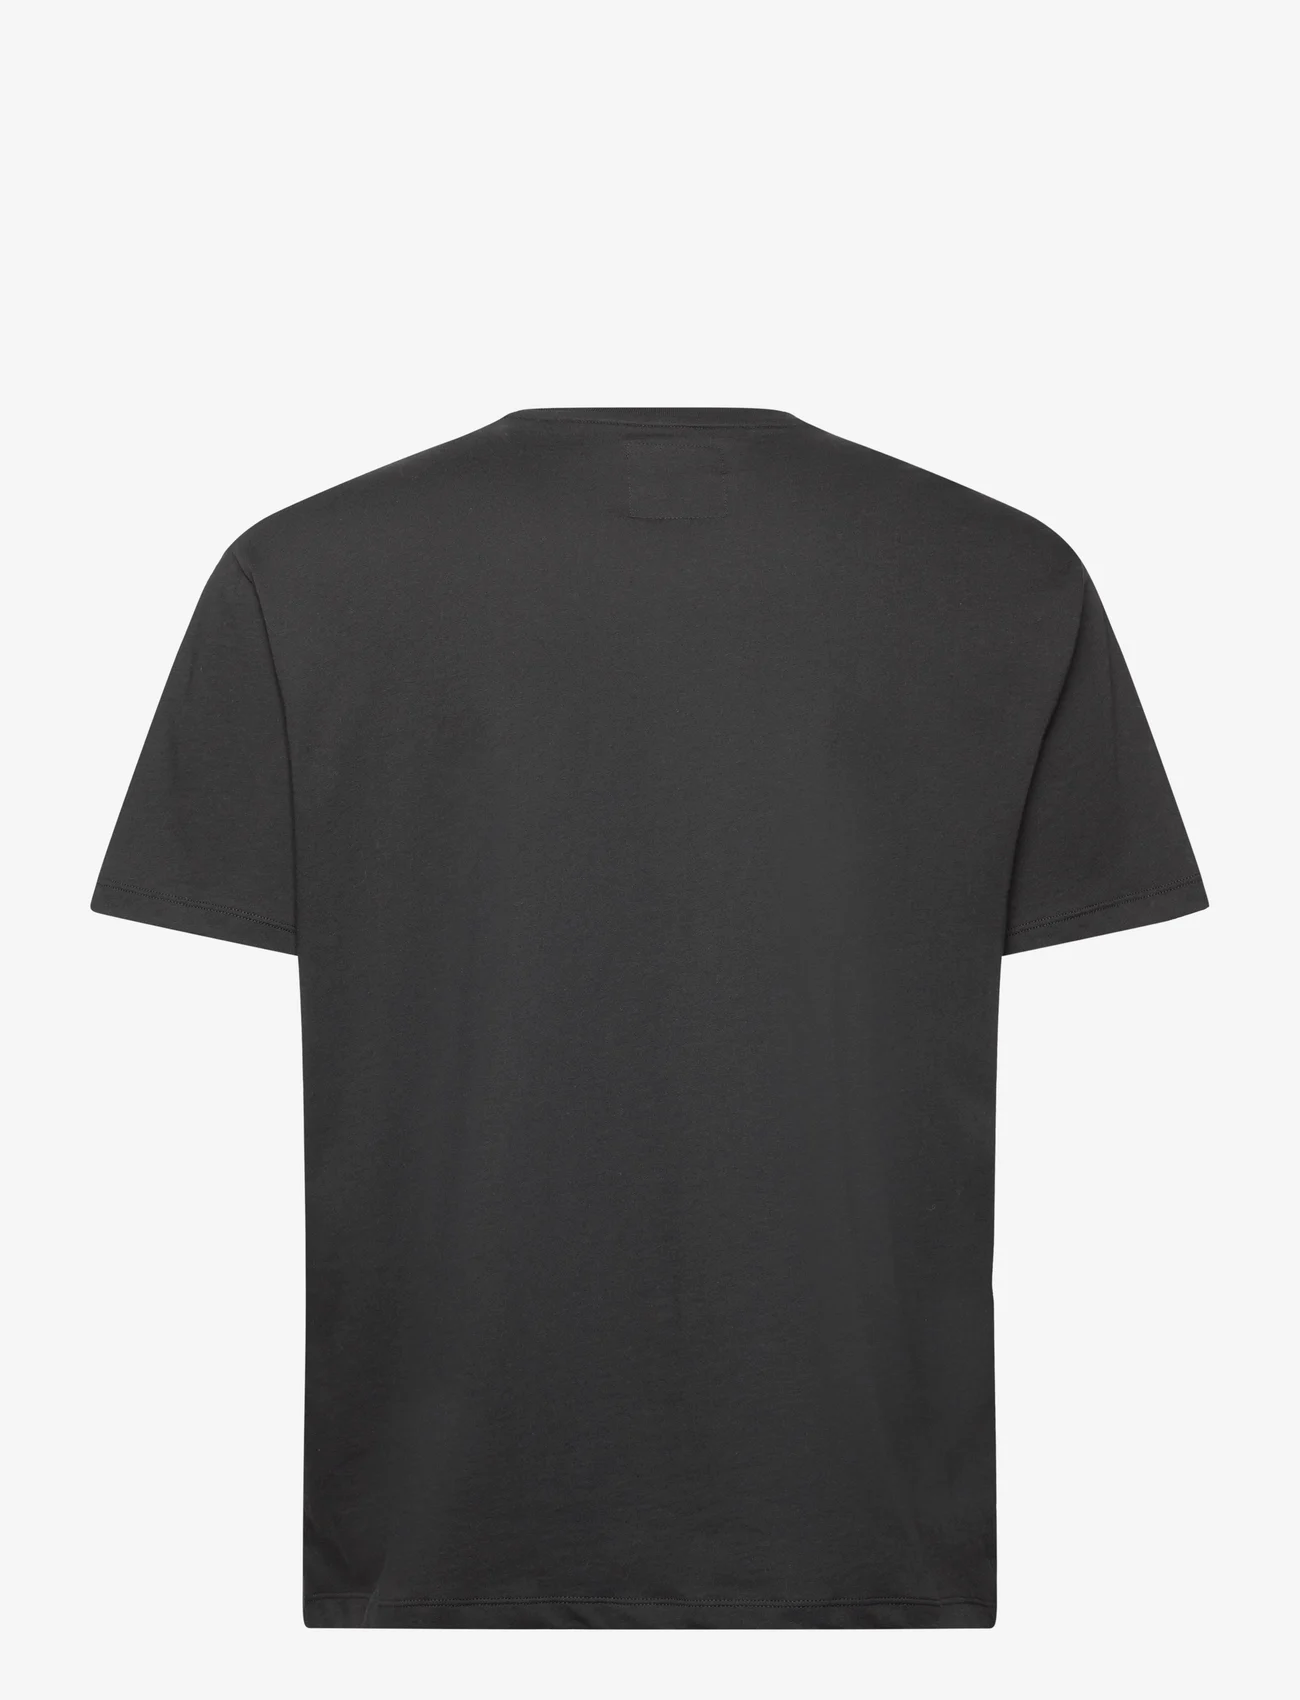 Armani Exchange - T-SHIRT - kortärmade t-shirts - 1200-black - 1